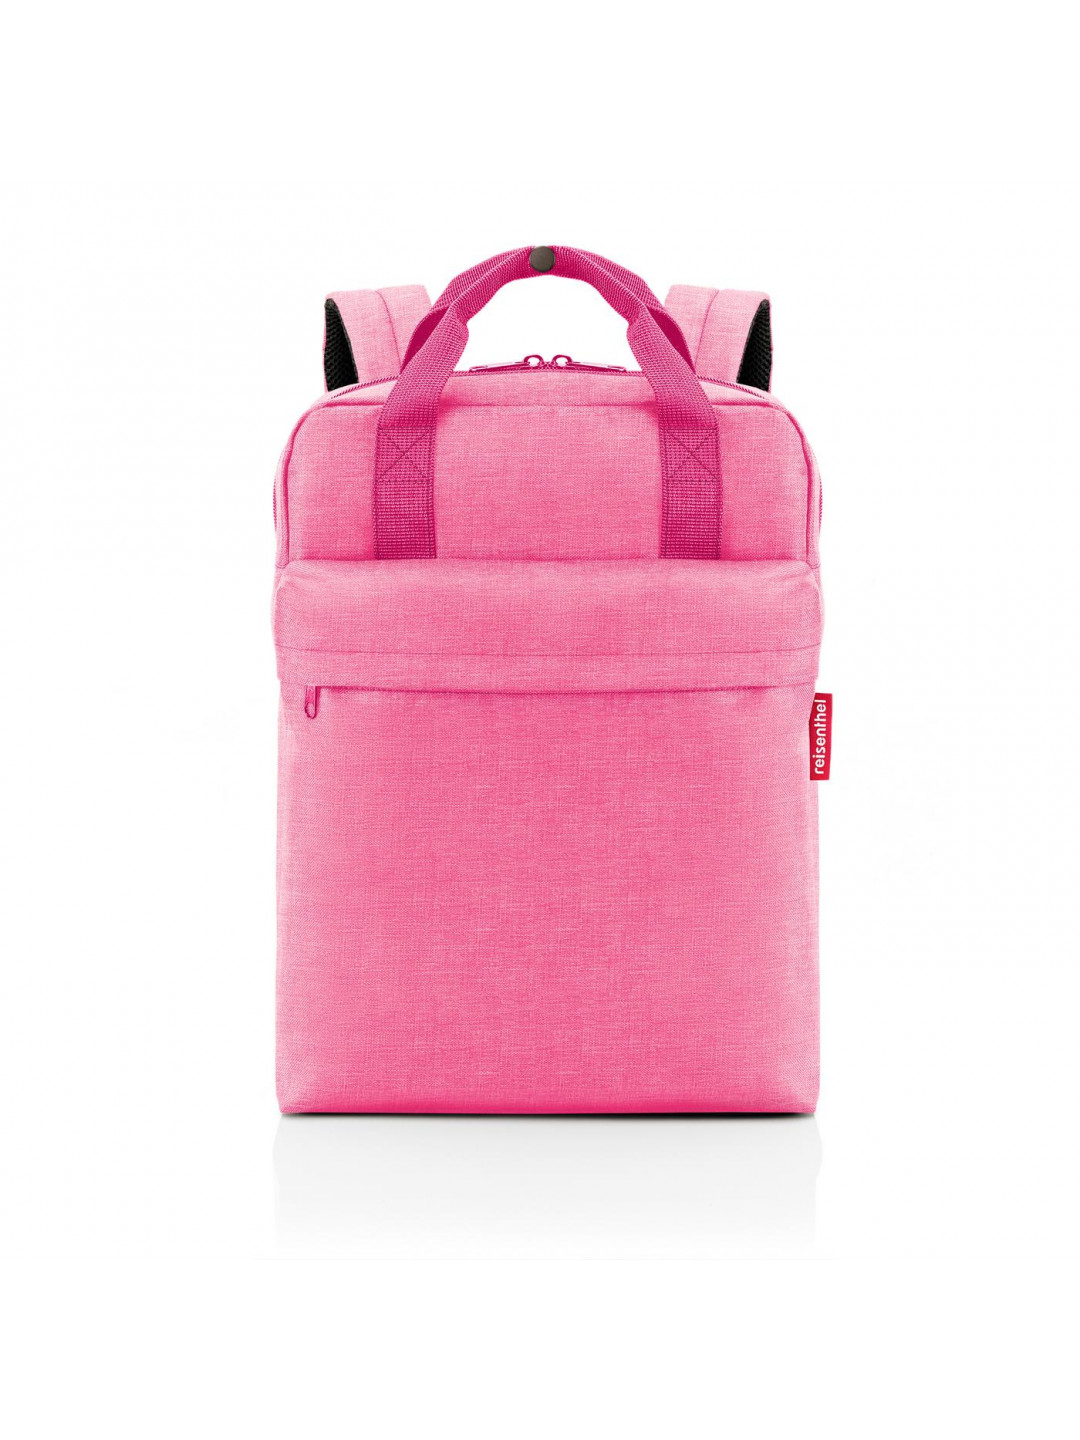 Reisenthel Allday Backpack M Twist Pink